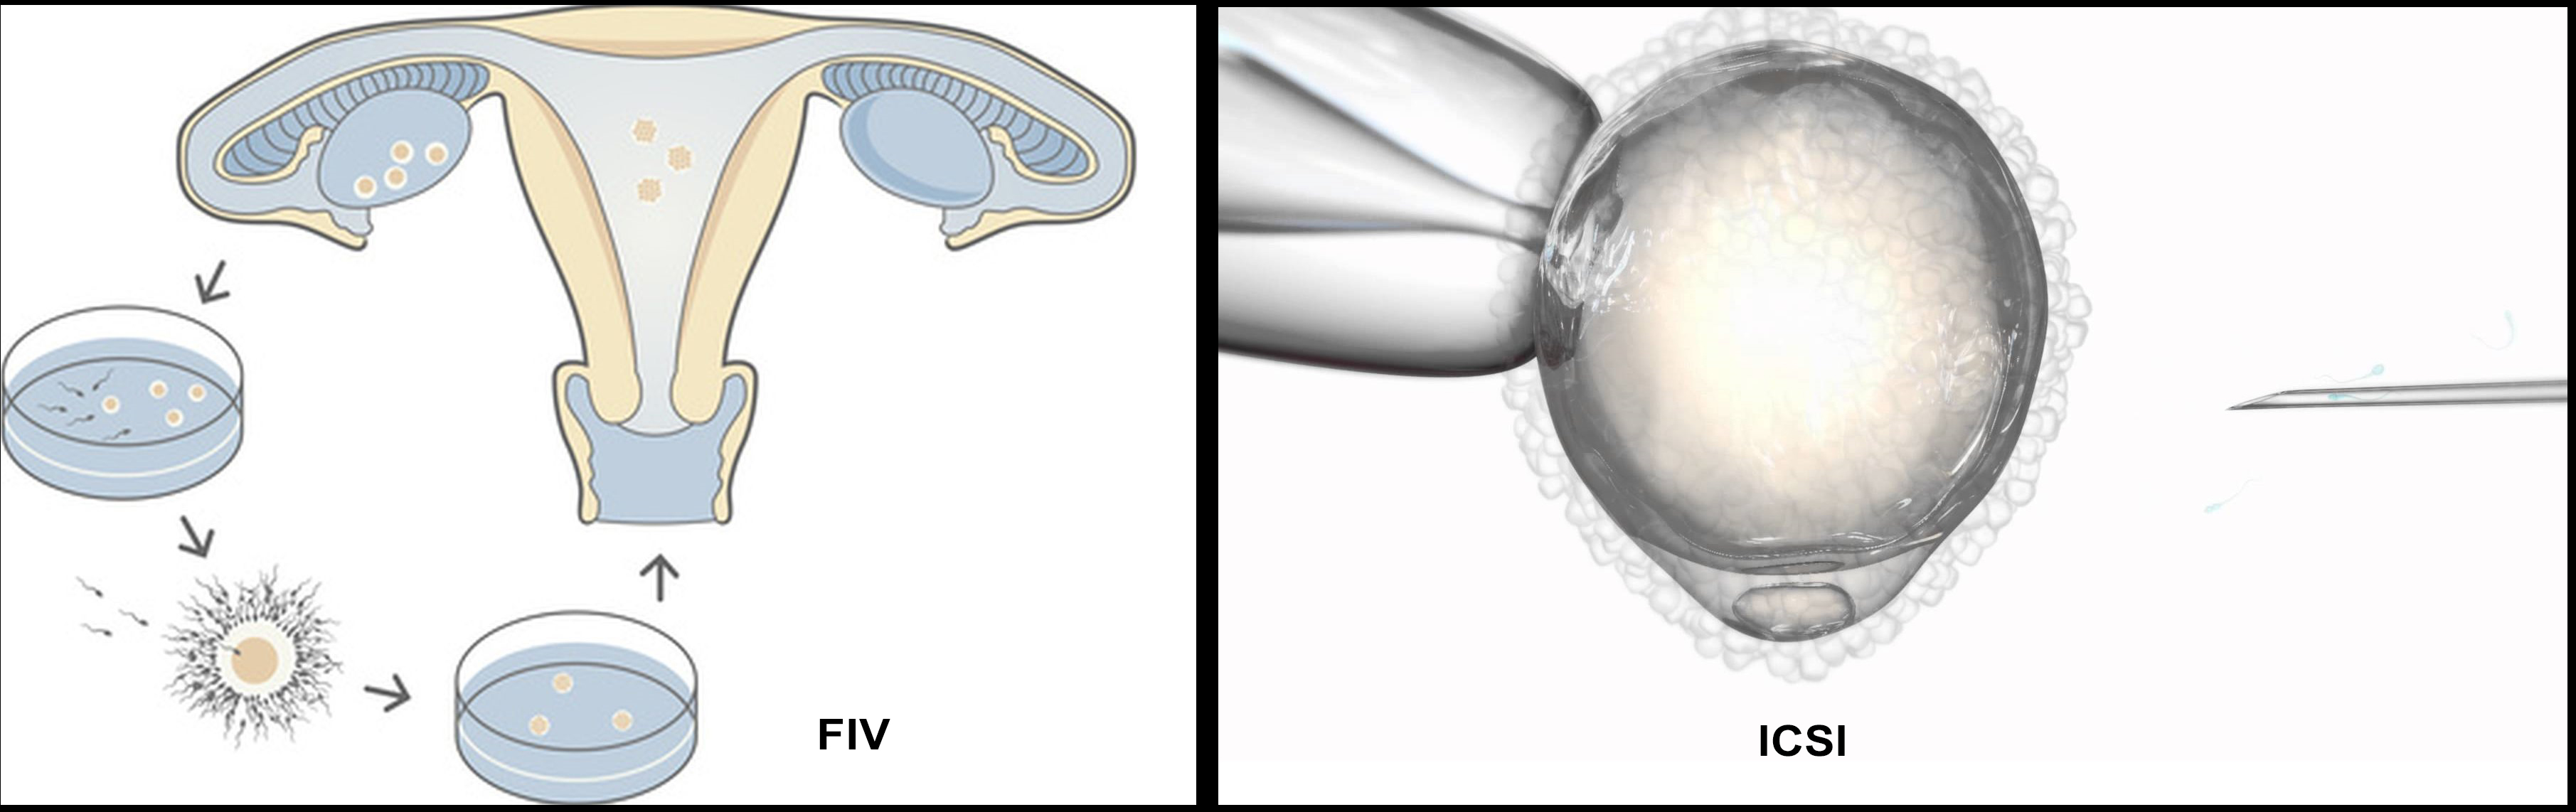 In-vitro fertilization (IVF) process, egg cells being fertilised by sperm outside of the womb